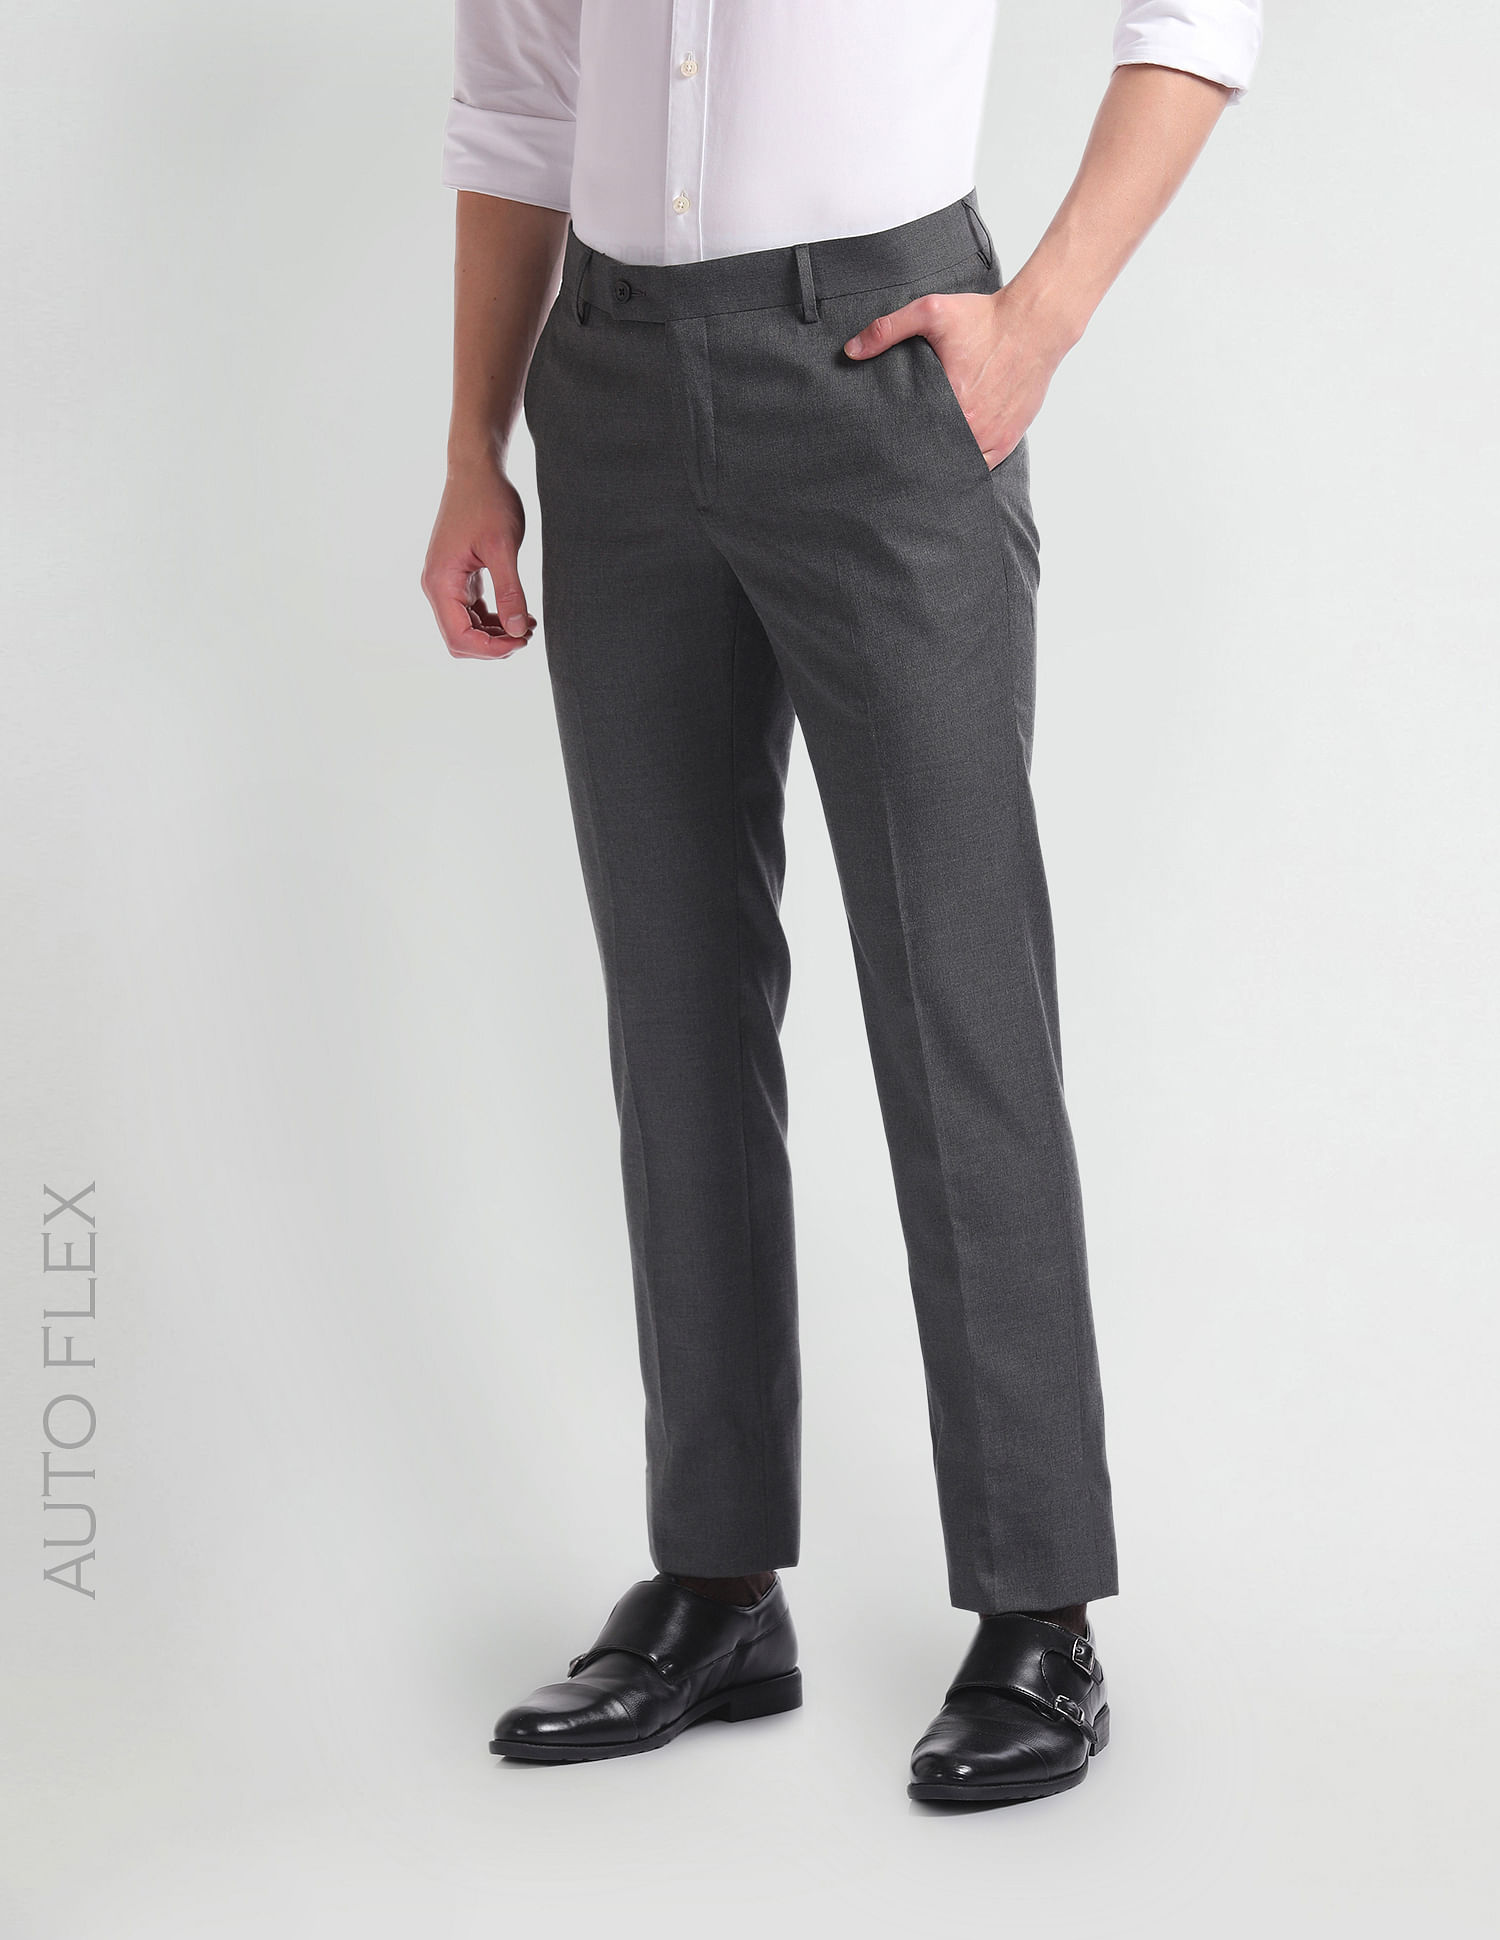 Buy Arrow Patterned Weave Autoflex Trousers - NNNOW.com-demhanvico.com.vn